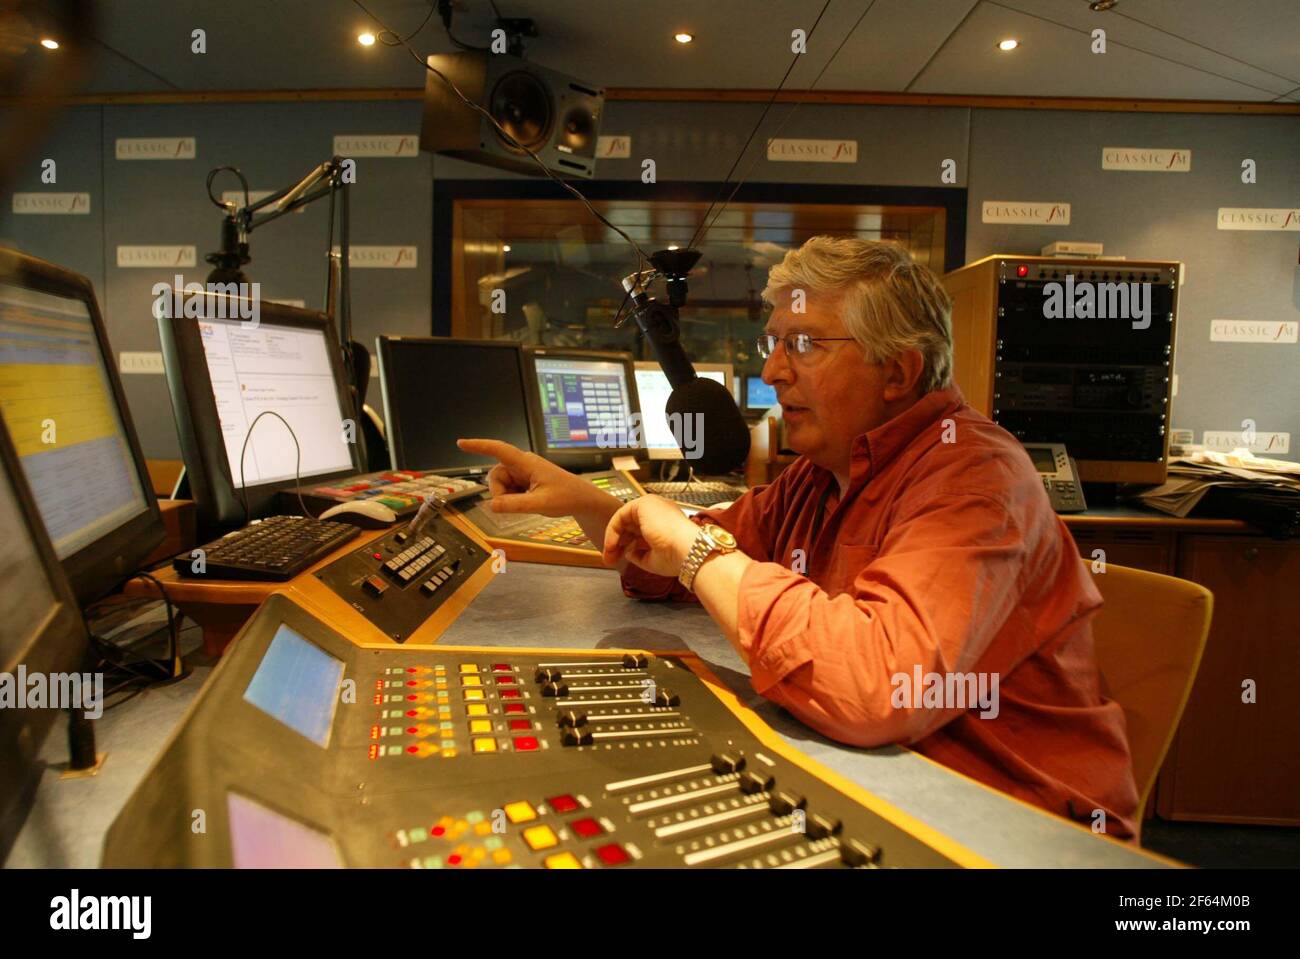 CLASSIC FM.....Award winning commercial radio. Simon Bates pic David  Sandison Stock Photo - Alamy